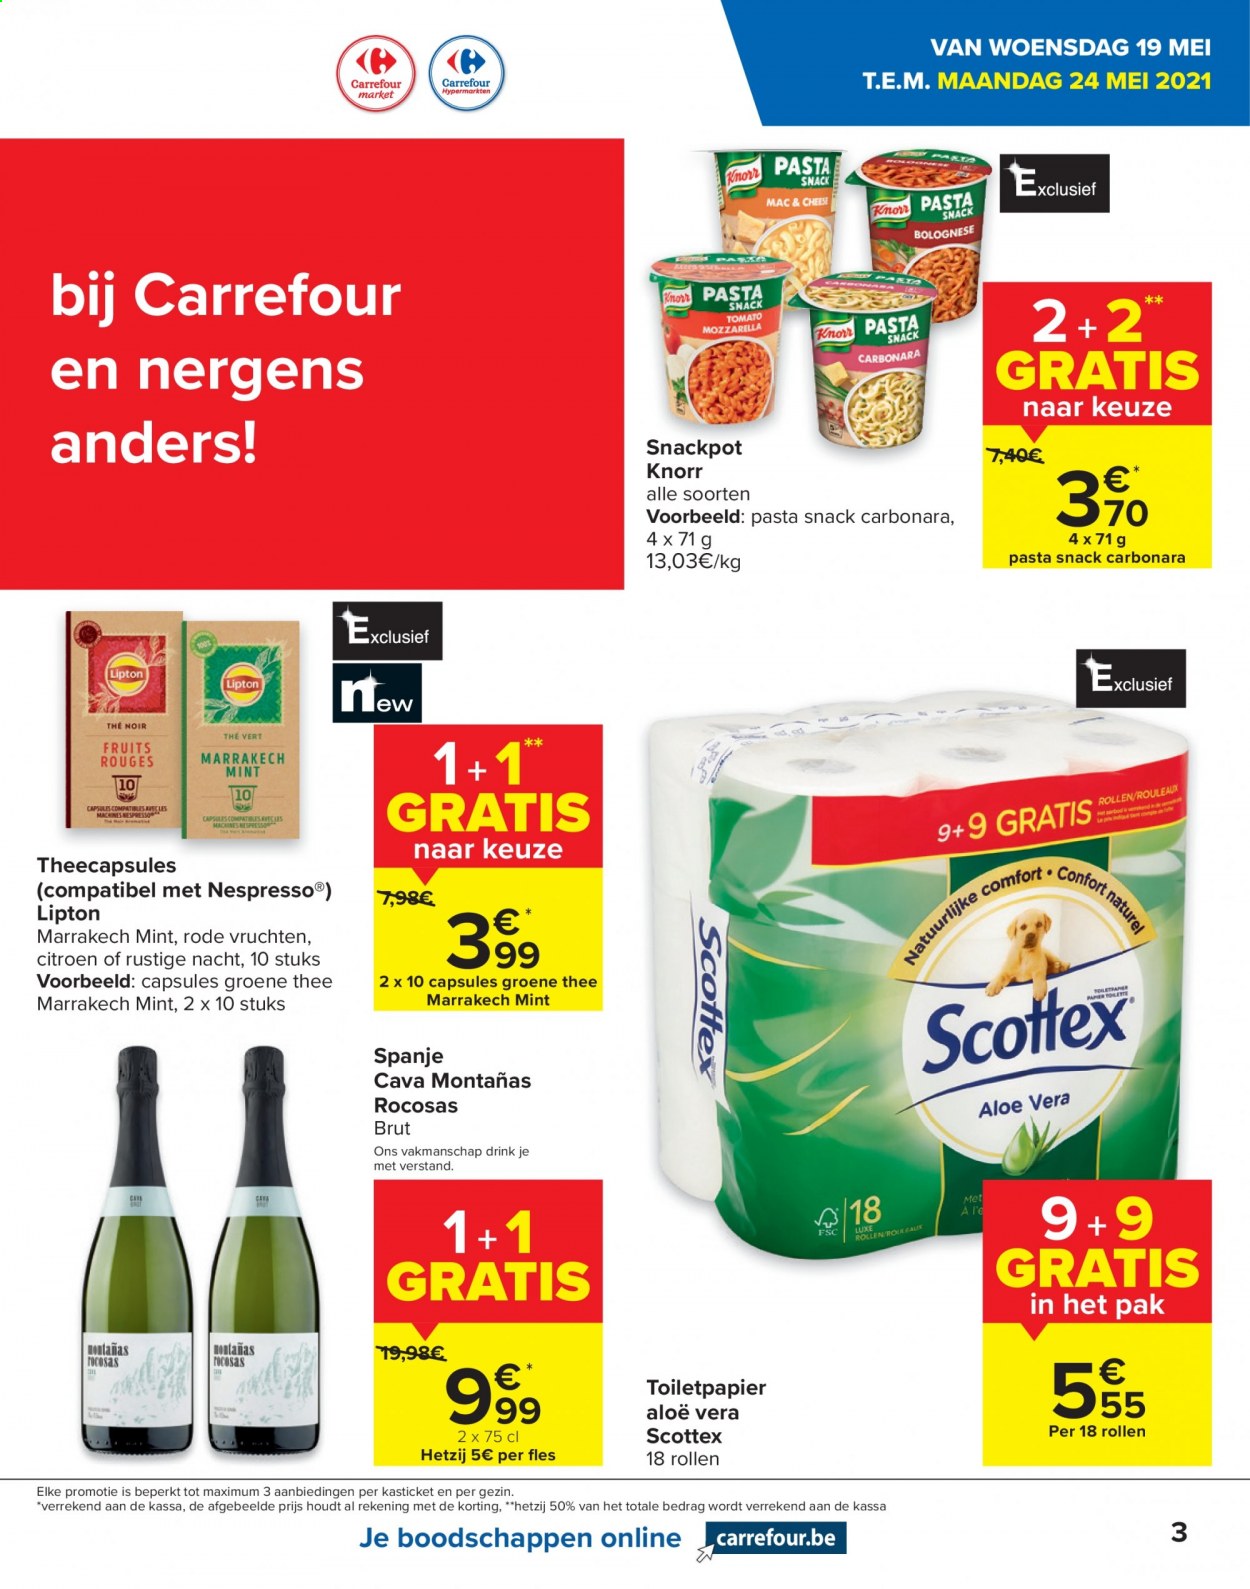 thumbnail - Carrefour-aanbieding - 19/05/2021 - 31/05/2021 -  producten in de aanbieding - Cava, citroen, pasta, rode vruchten, Nespresso, Lipton, aloe vera. Pagina 3.